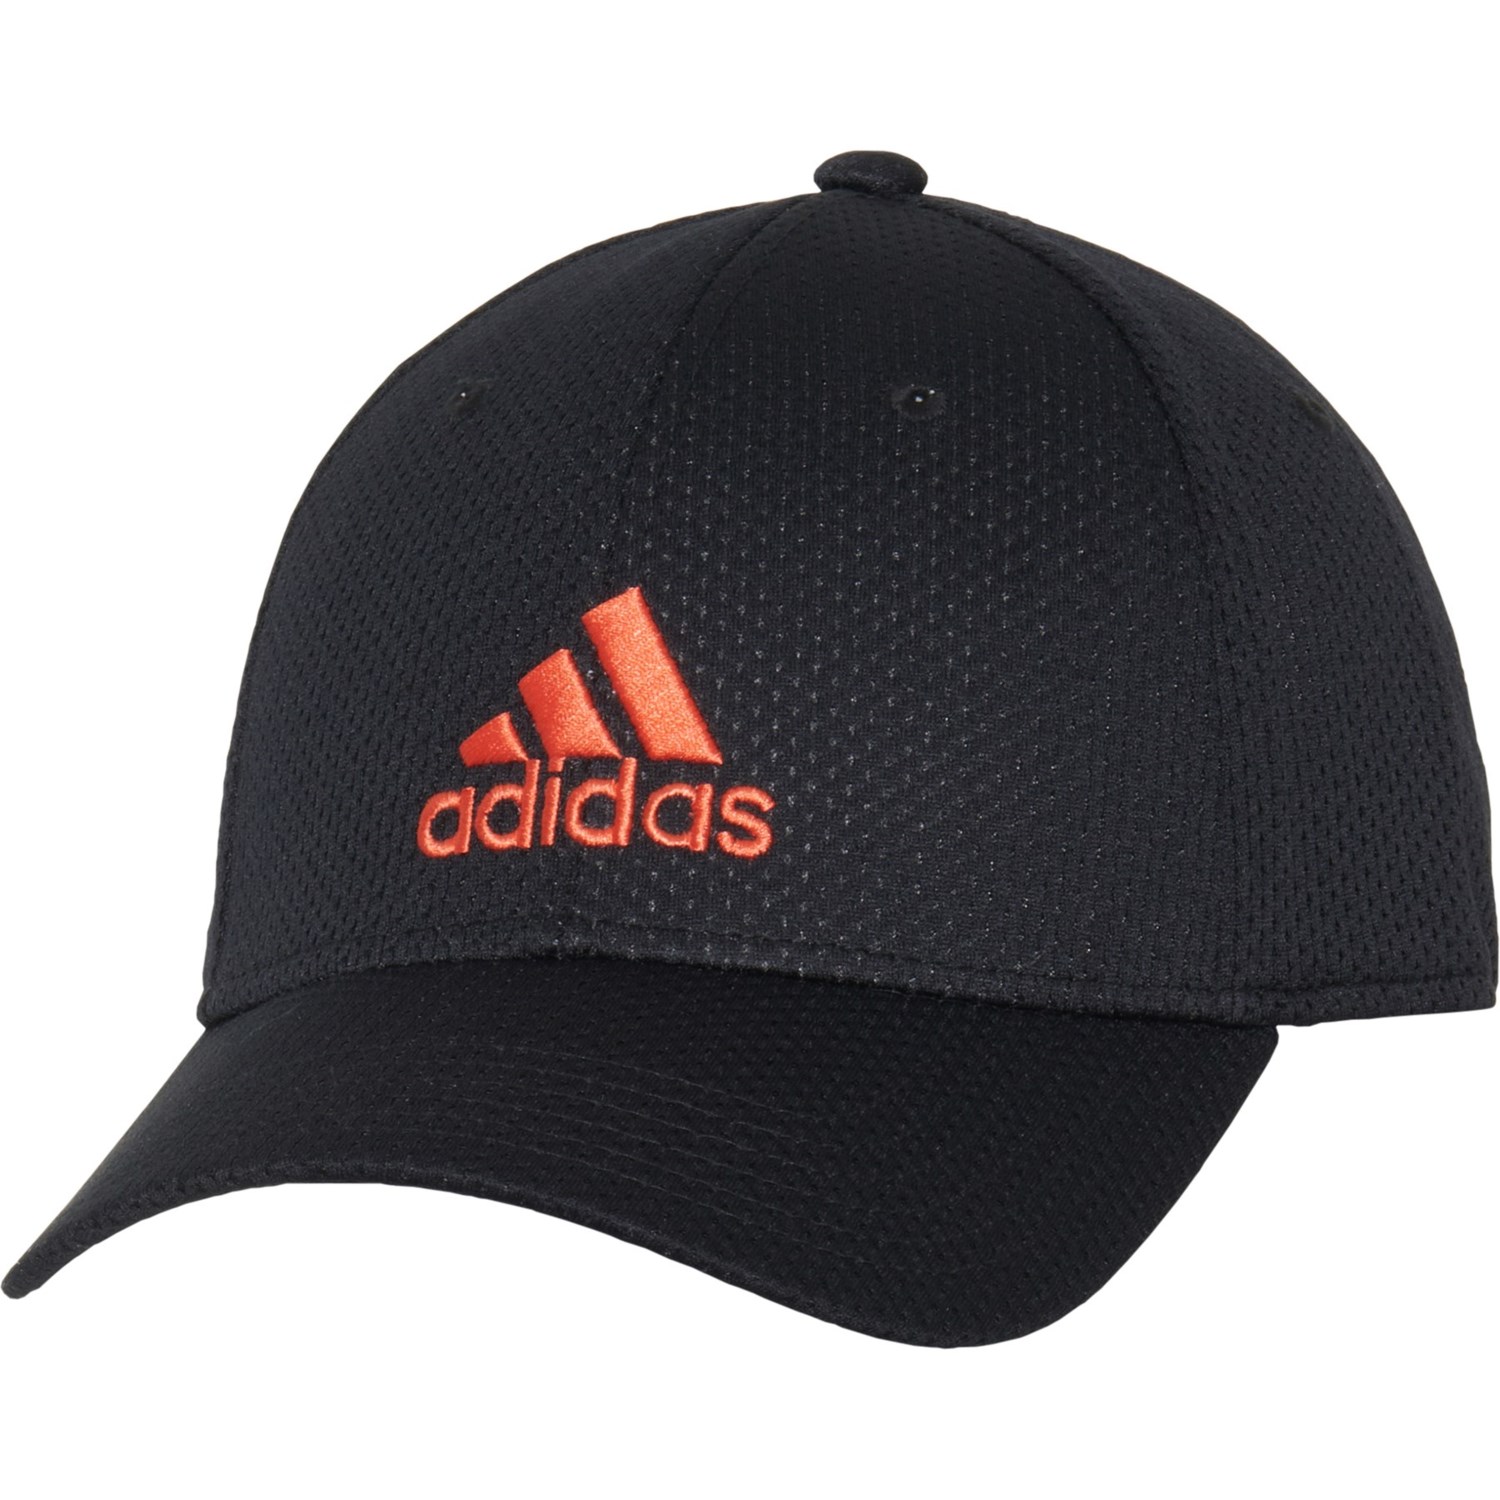 adidas Zags II A-Flex Baseball Cap (For Men) - Save 27%